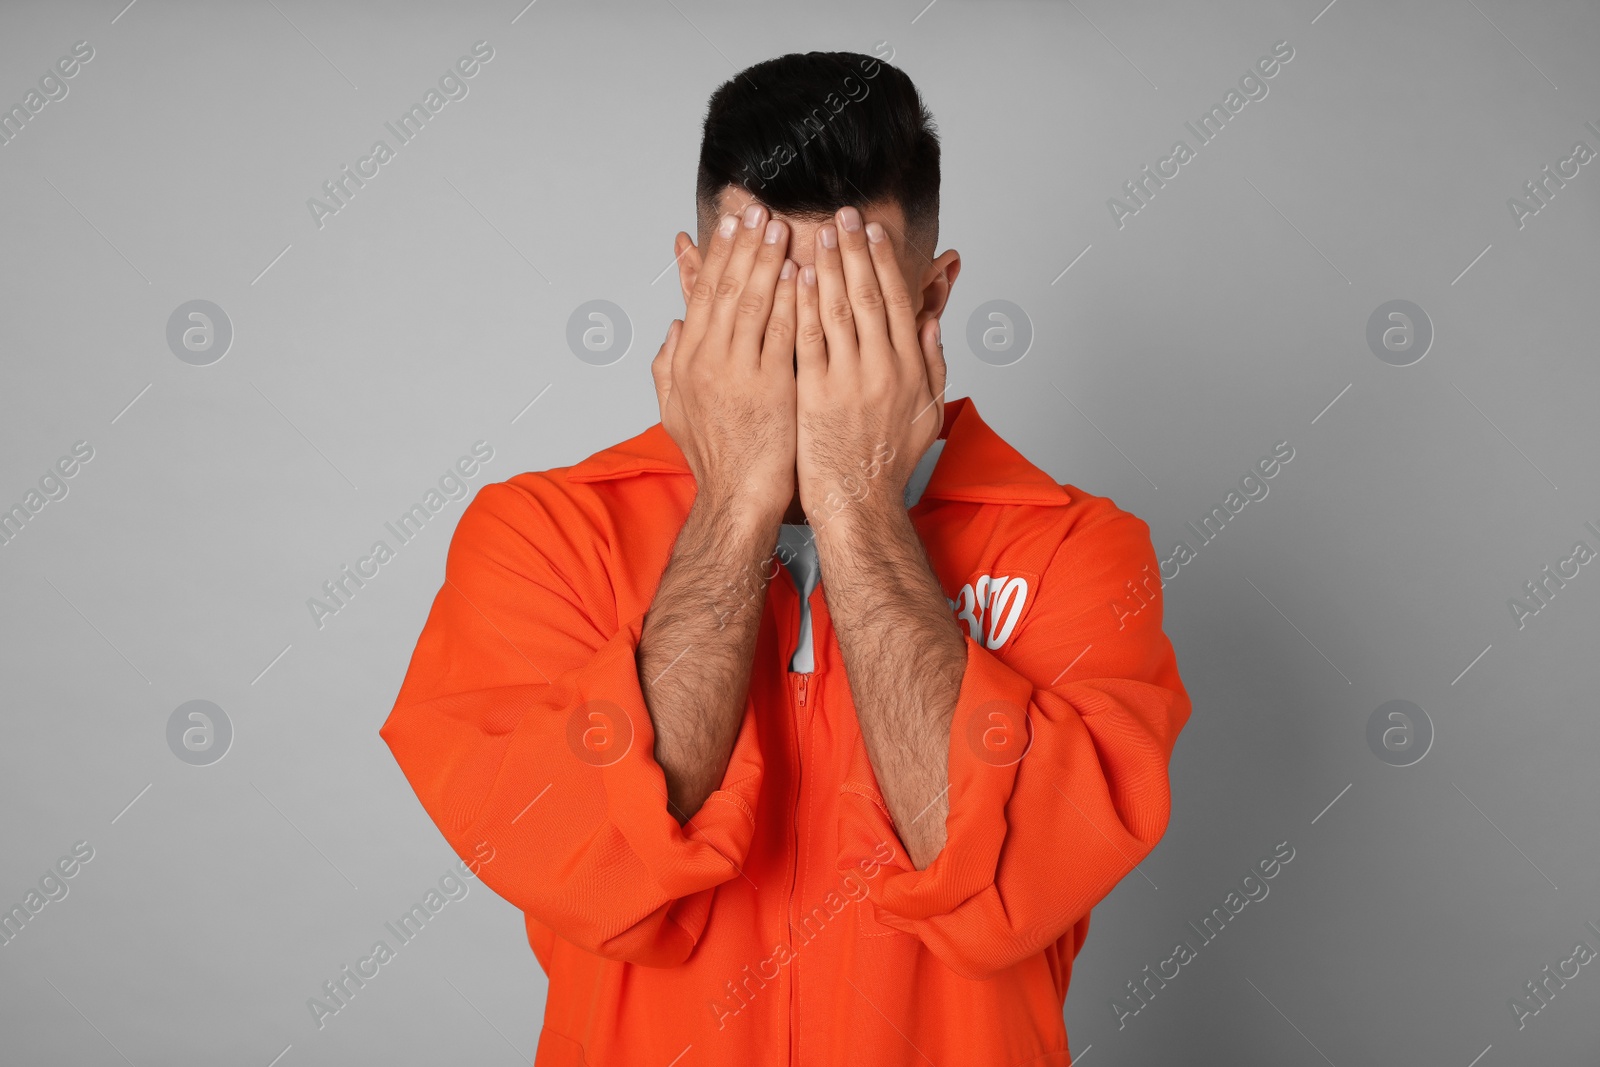 Photo of Remorseful prisoner in orange jumpsuit hiding his face on grey background